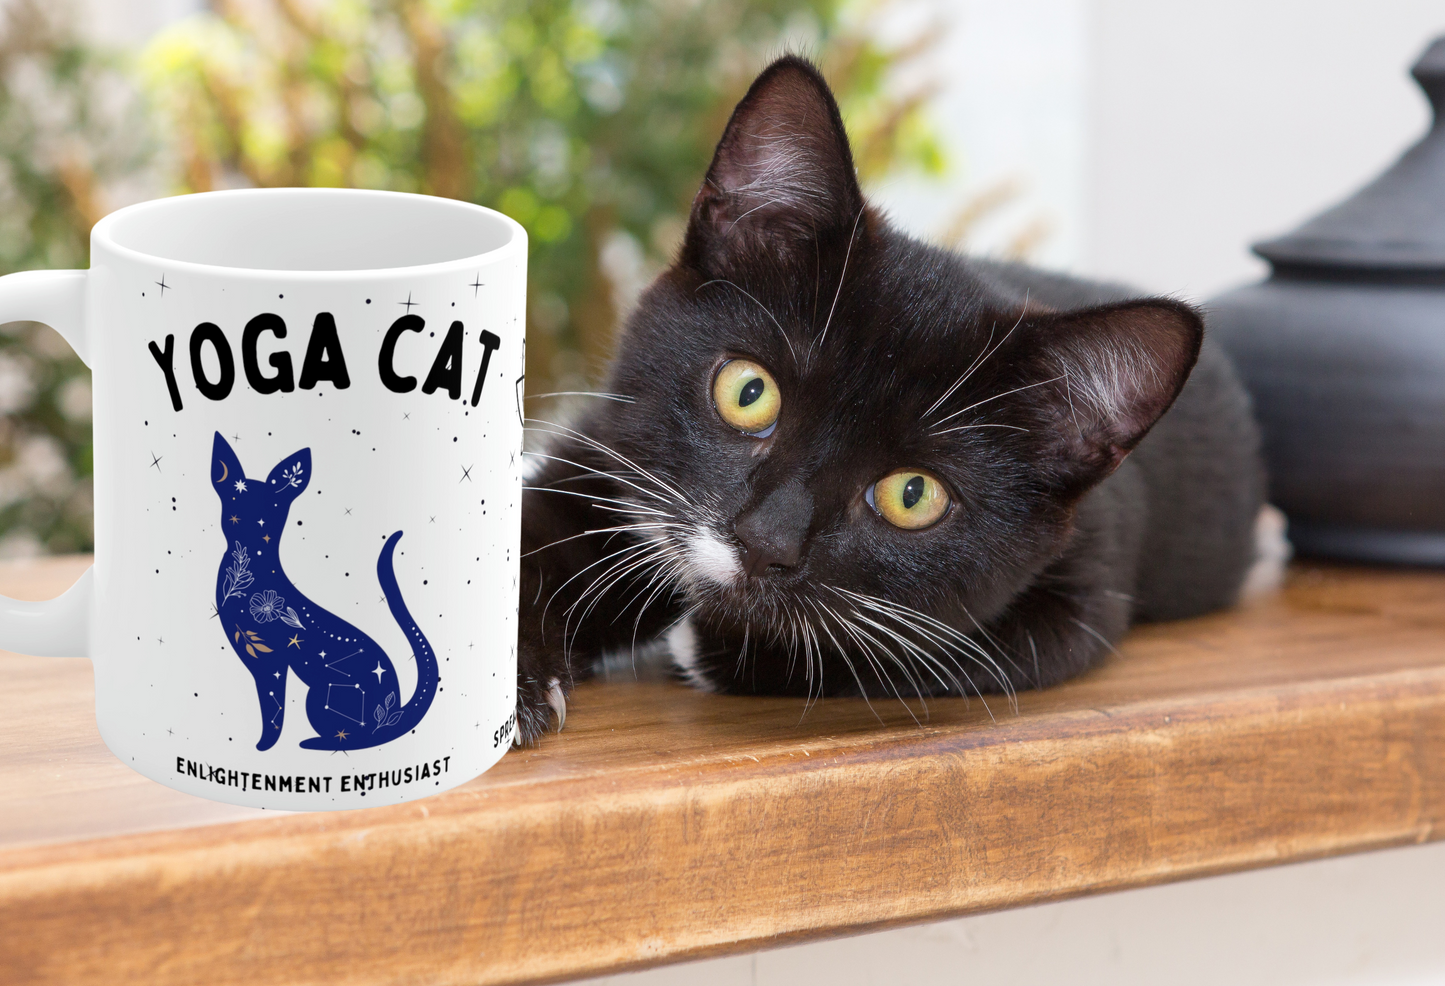 Yoga Cat Mug - Arjuna Rigby Art and Lifestyle Store